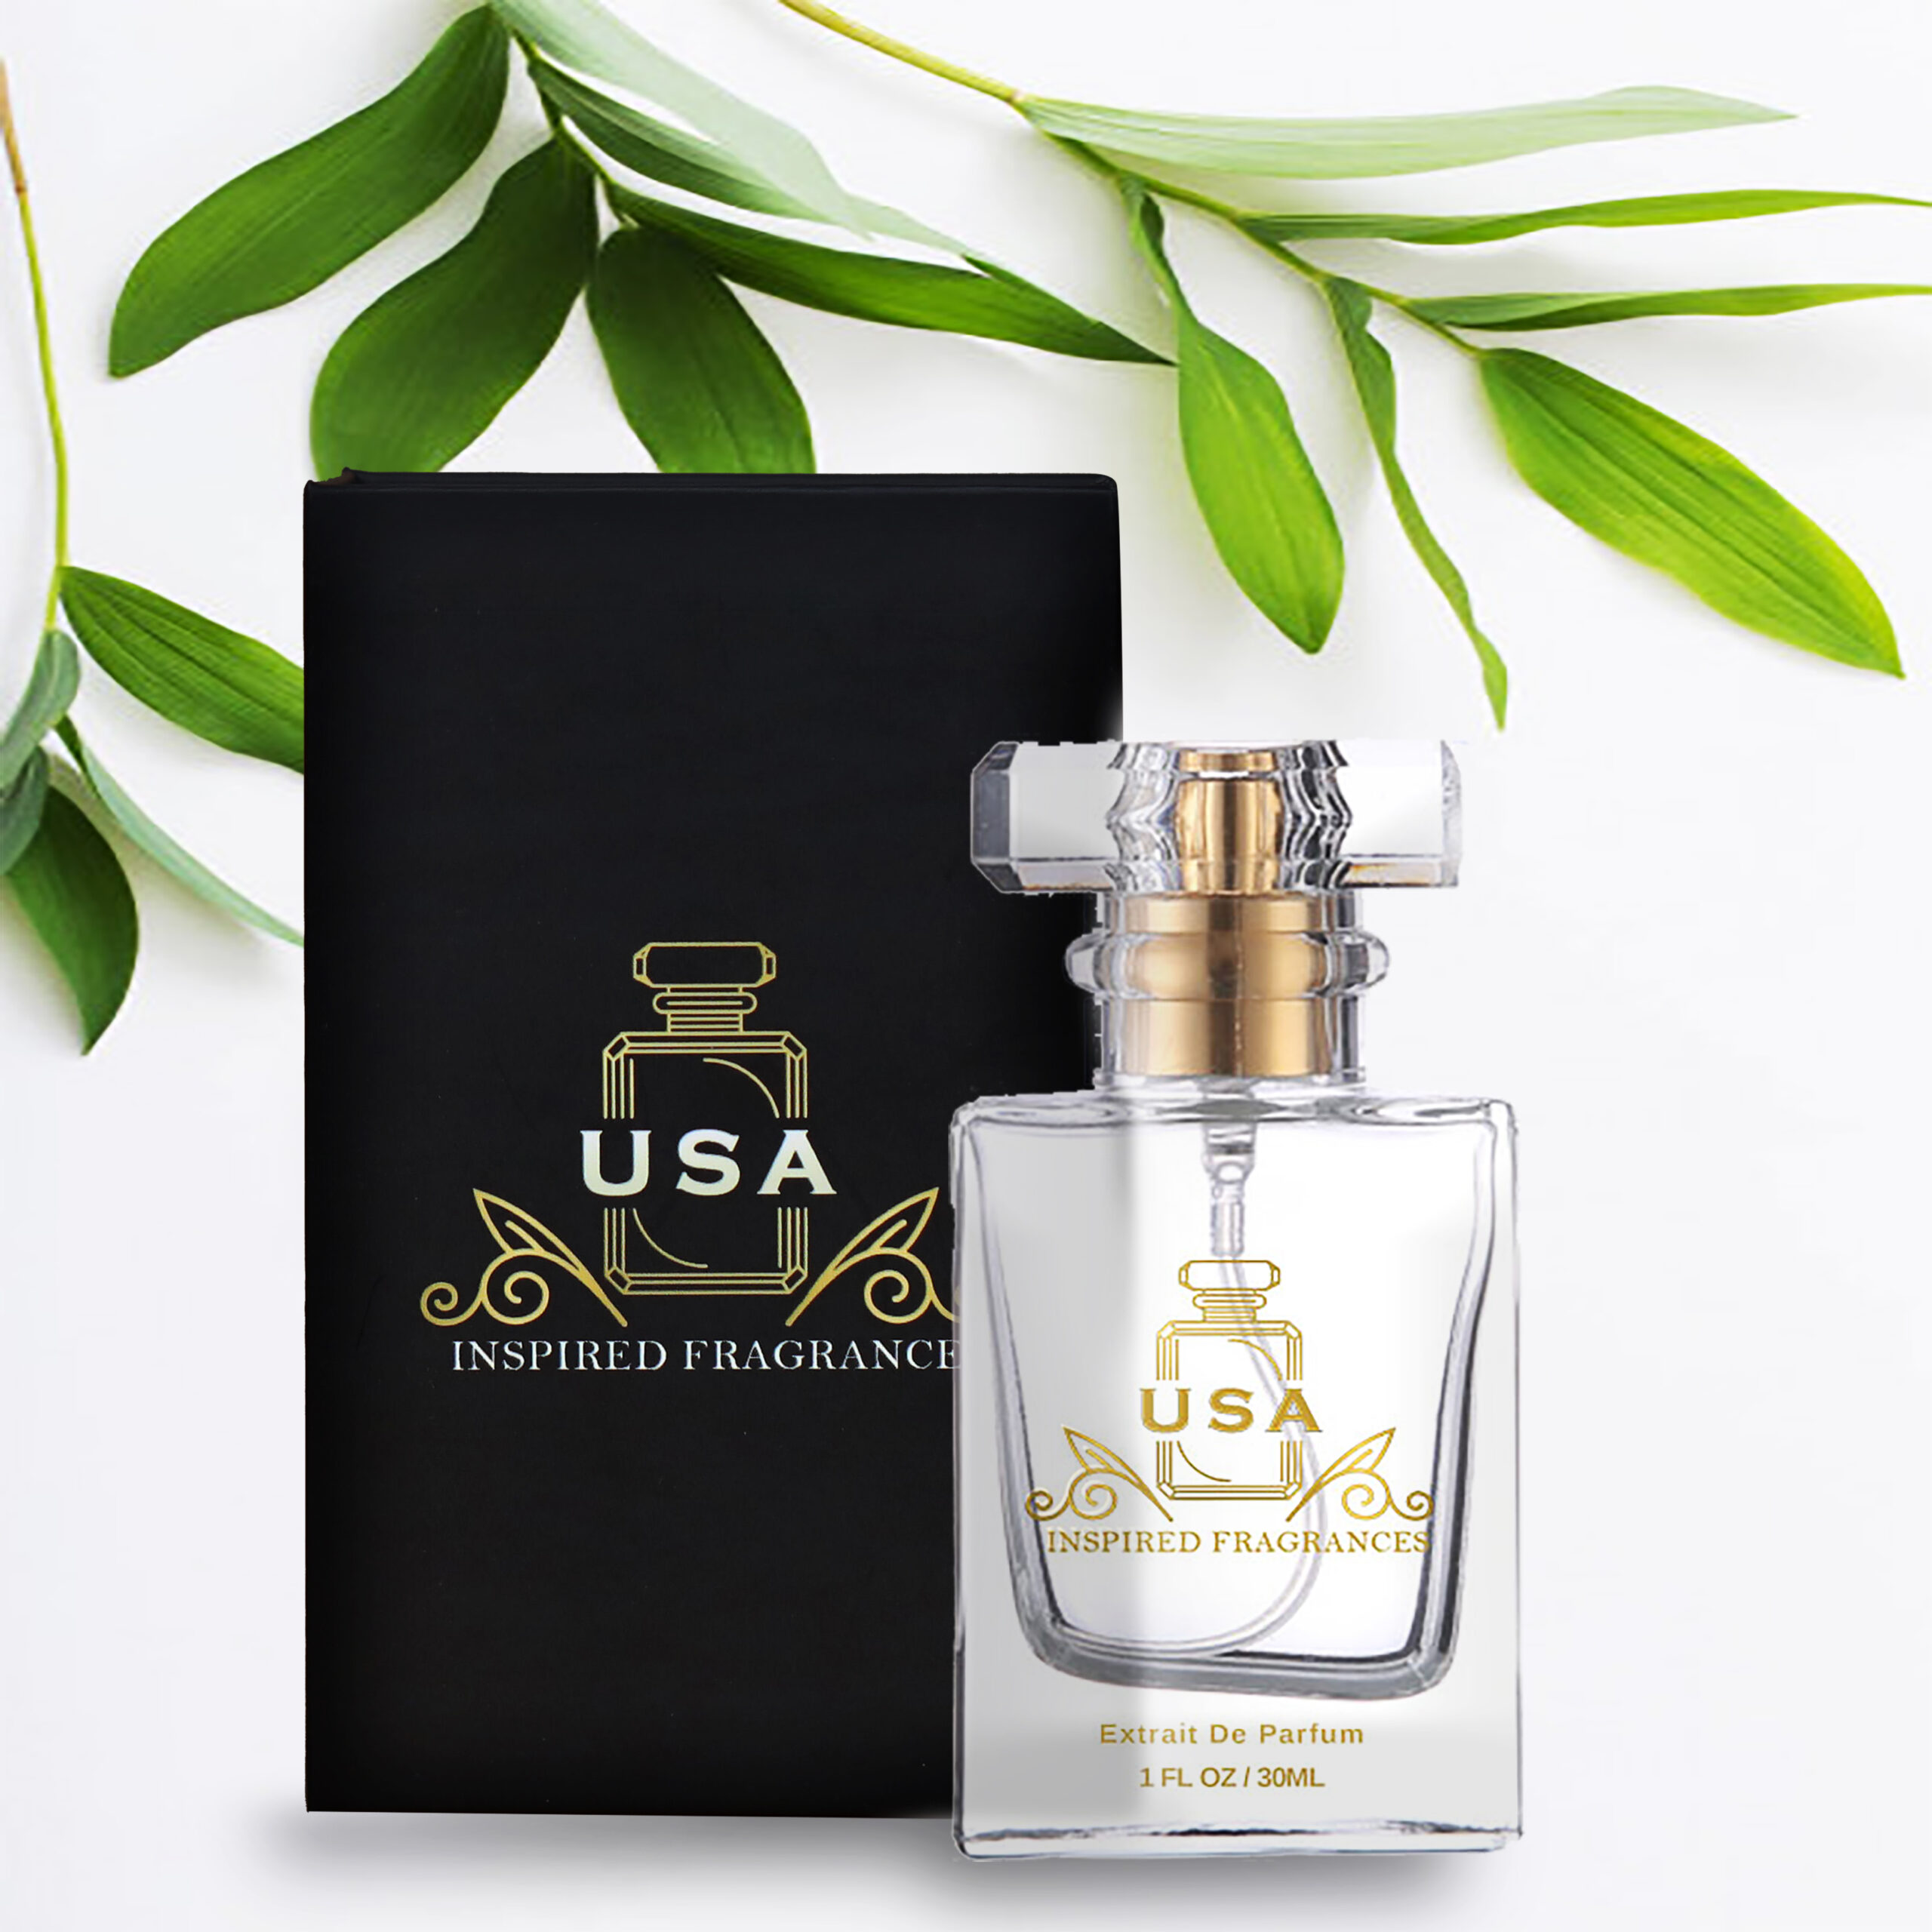 Louis Vuitton Attrape Reves  Fragrances perfume woman, Perfume scents,  Lancome perfume